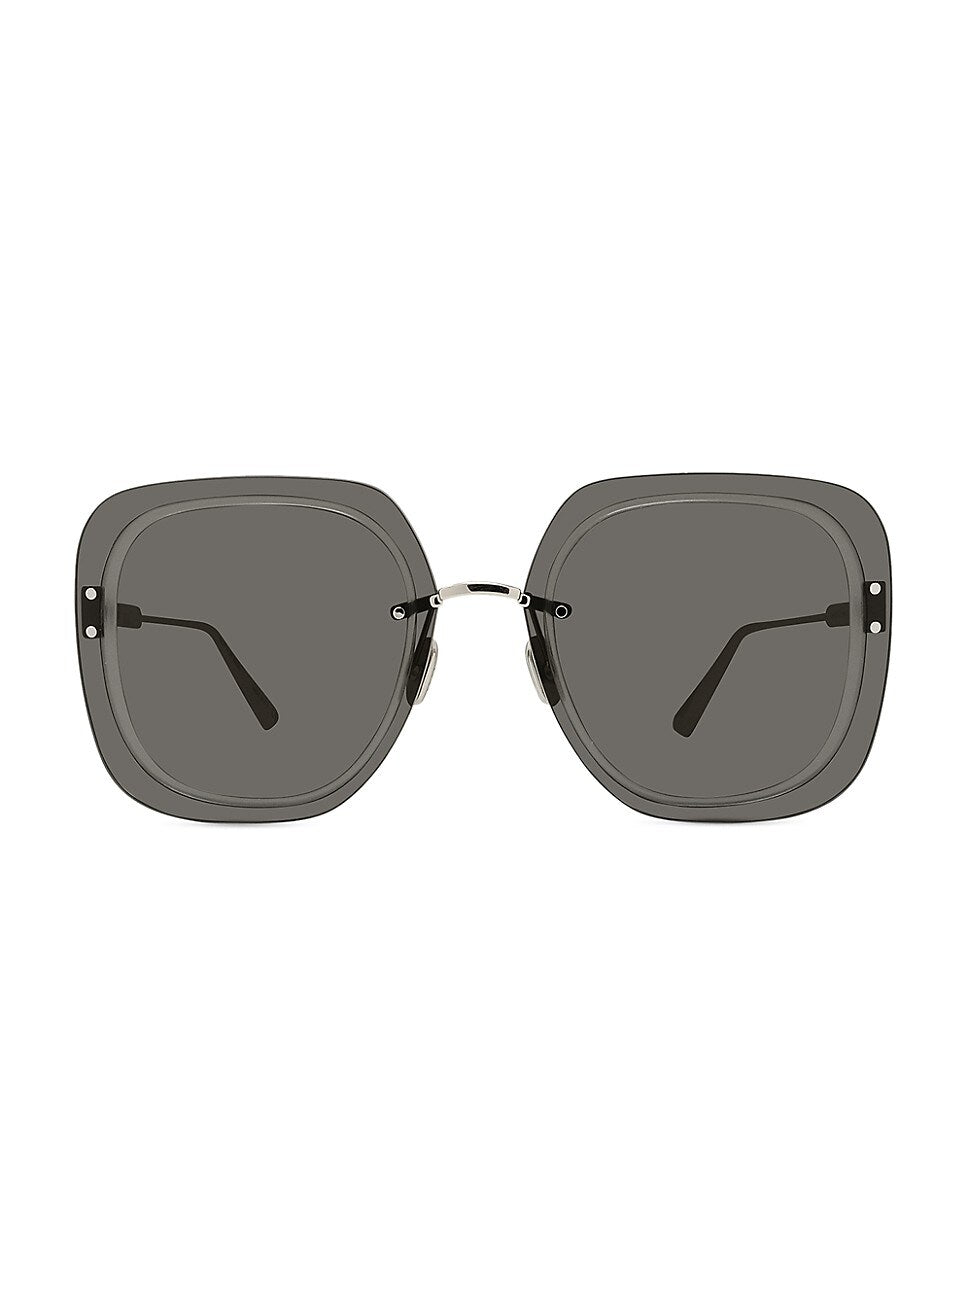 Christian Dior ULTRADIOR-SU-B0A0-65  New Sunglasses